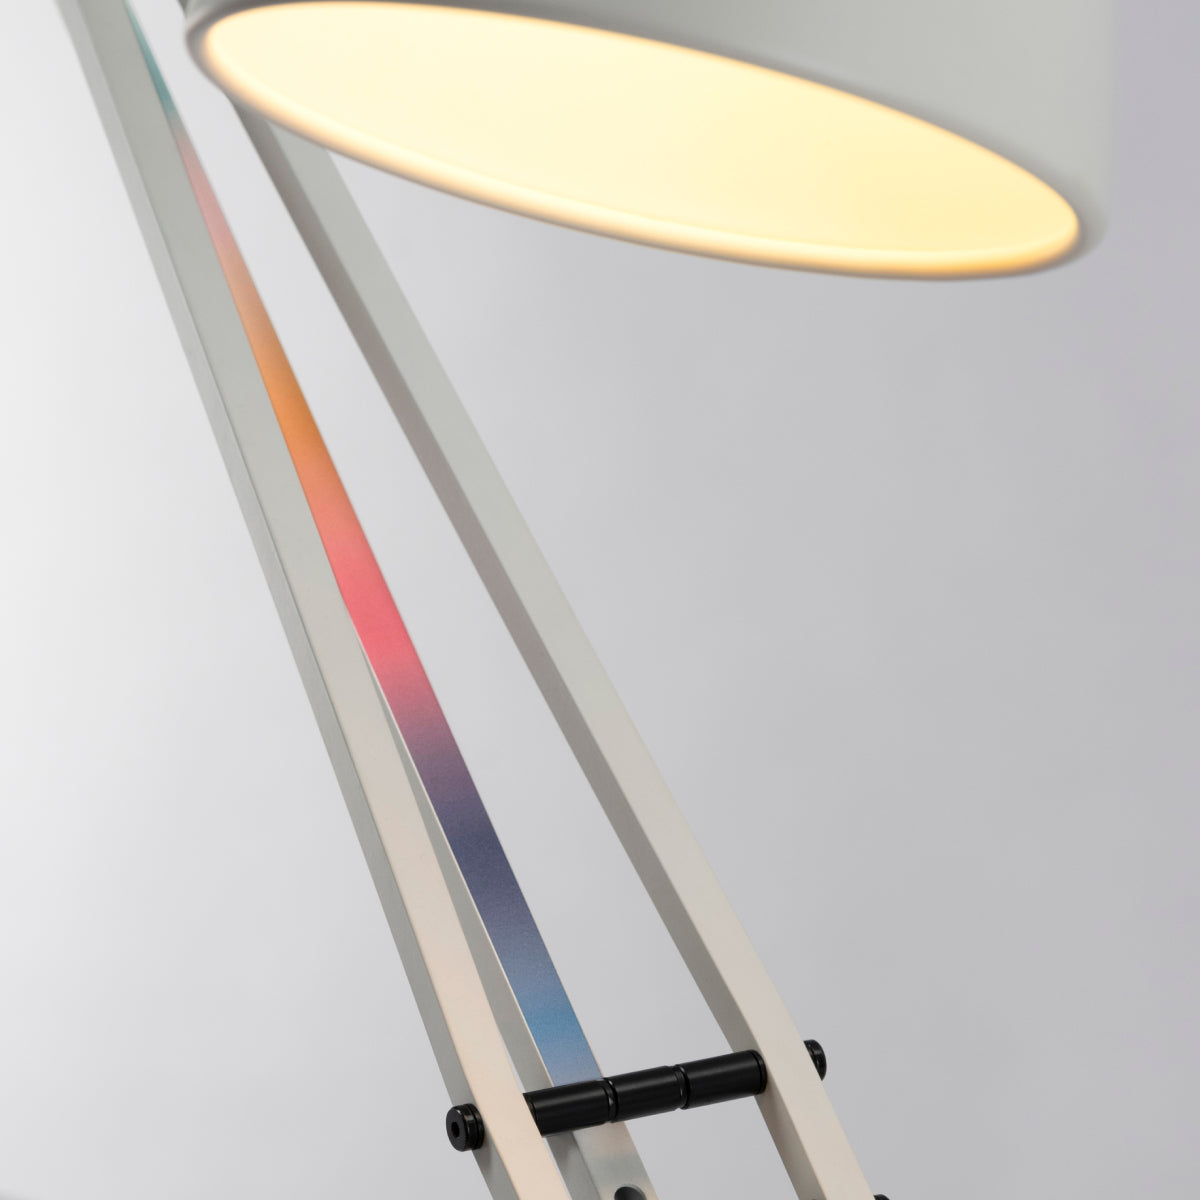 Type 75 Desk Lamp: Paul Smith Edition Six